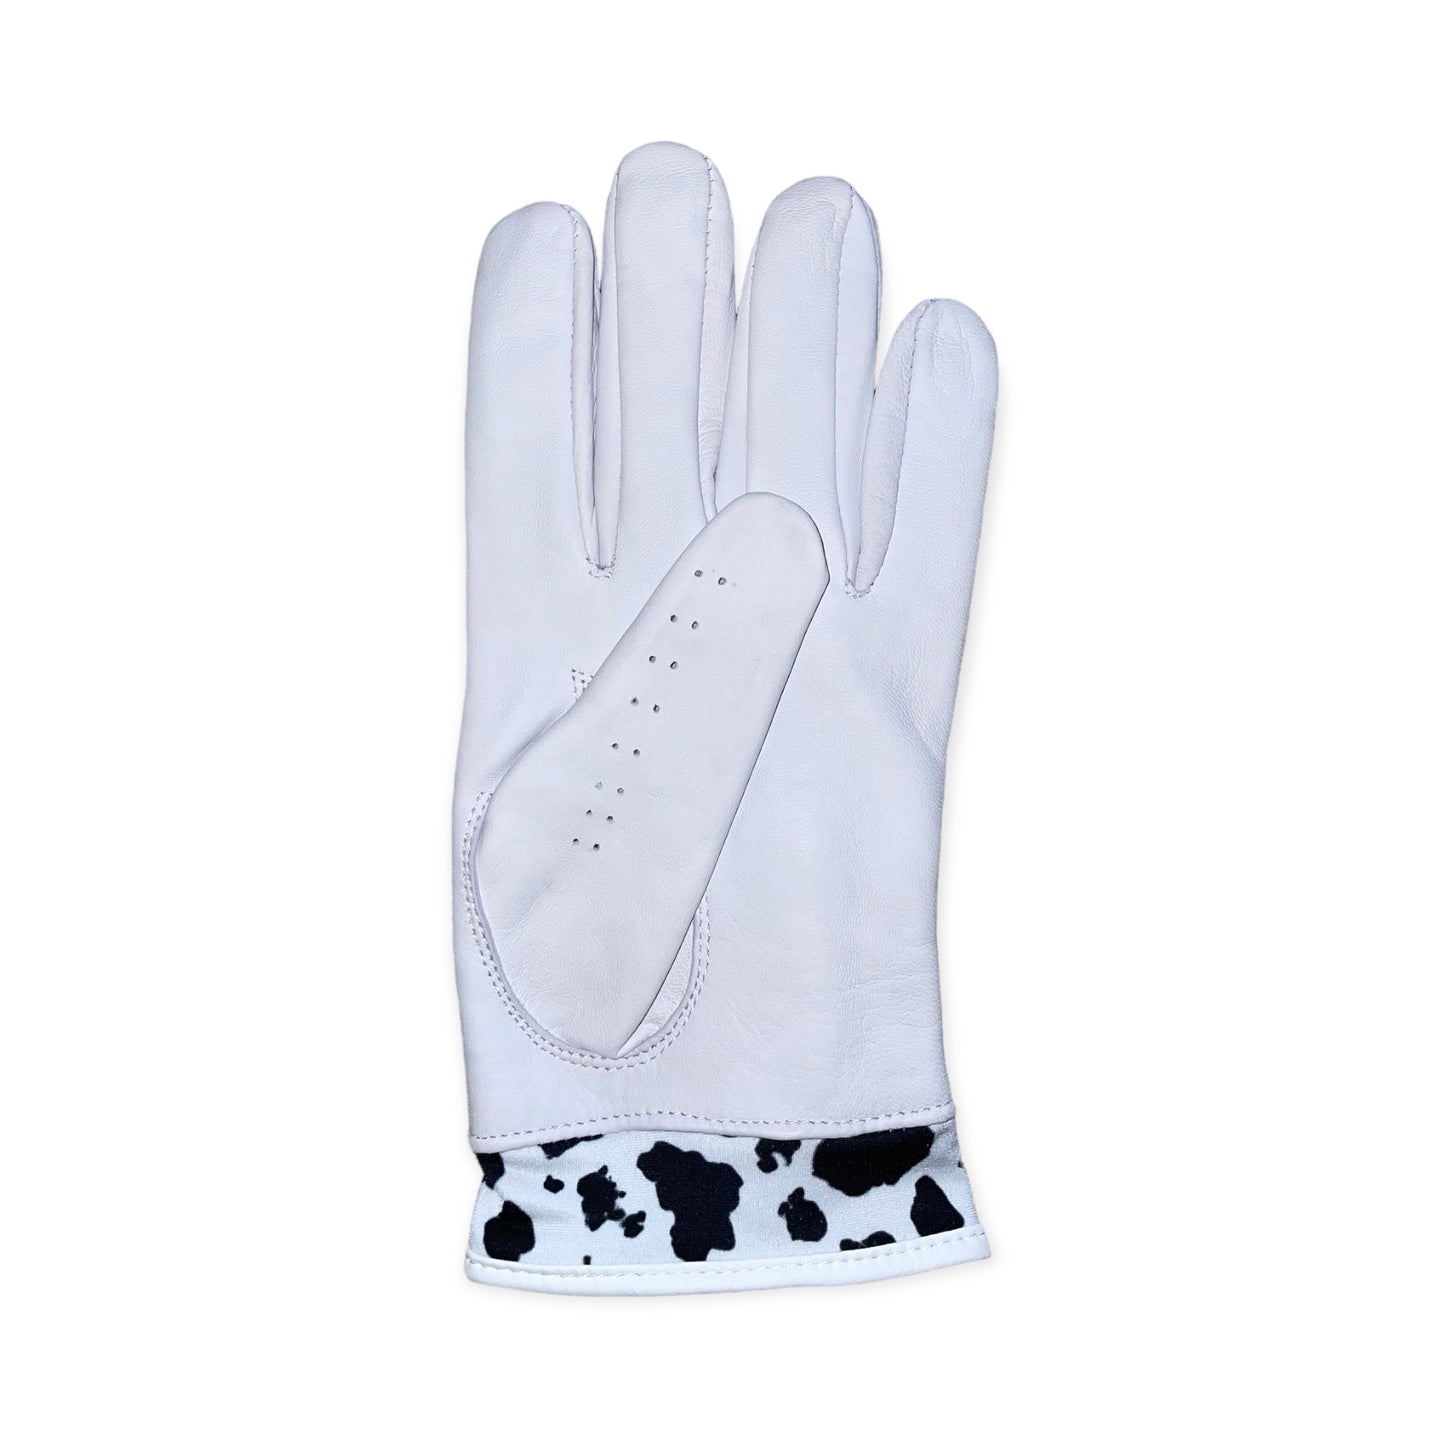 White Udderly Turrible glove